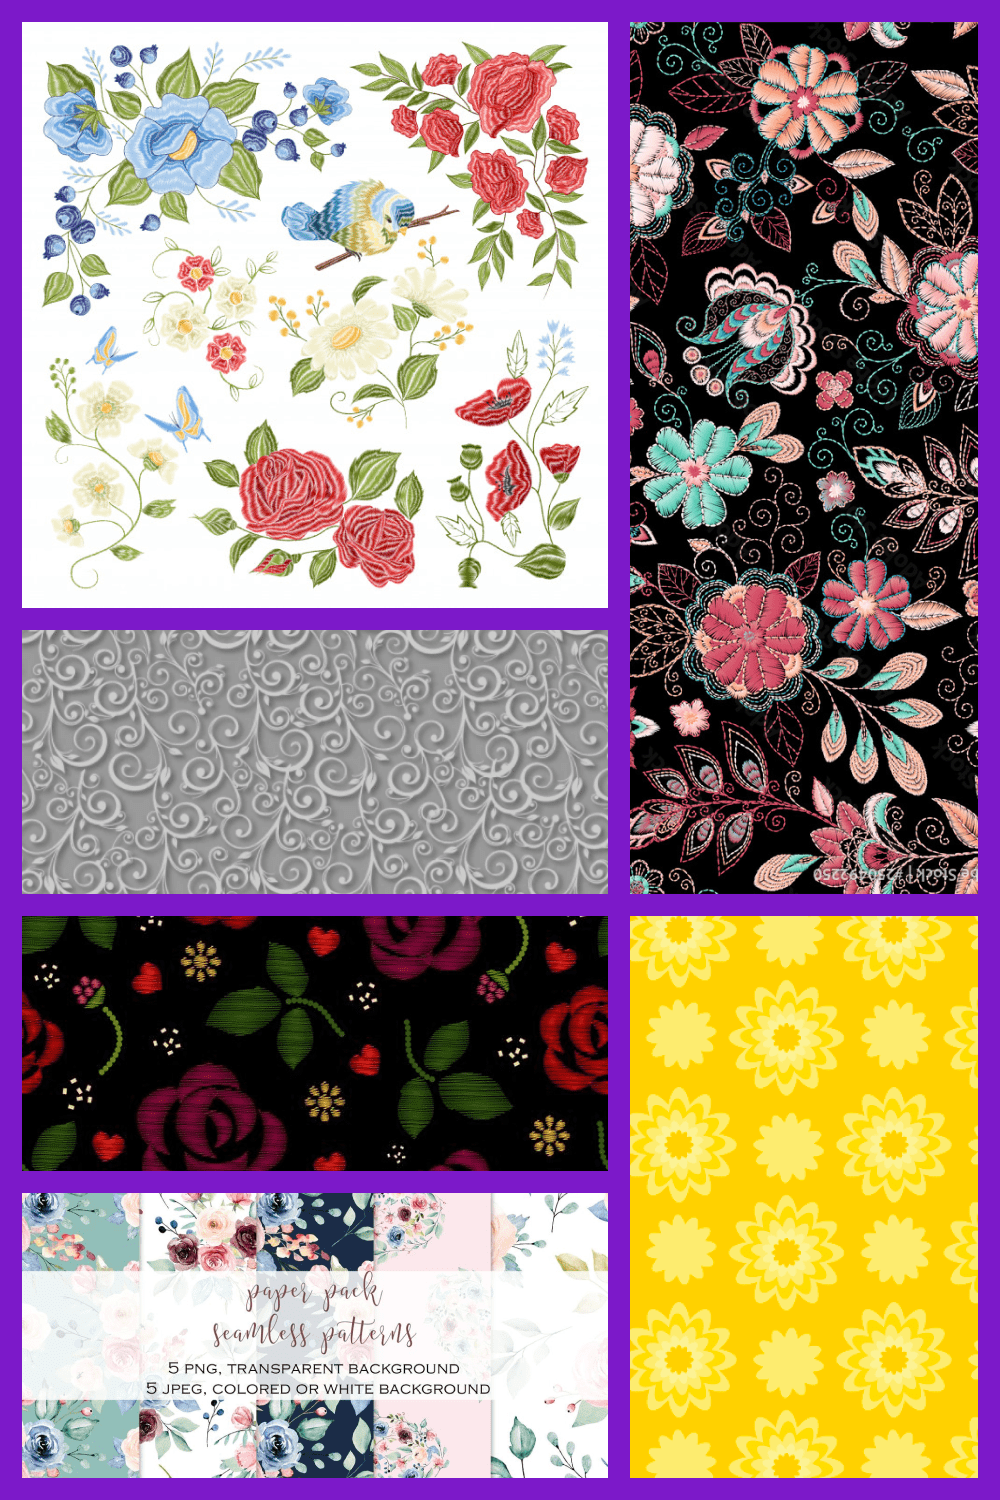 Flower Embroidery Pattern Pinterest.